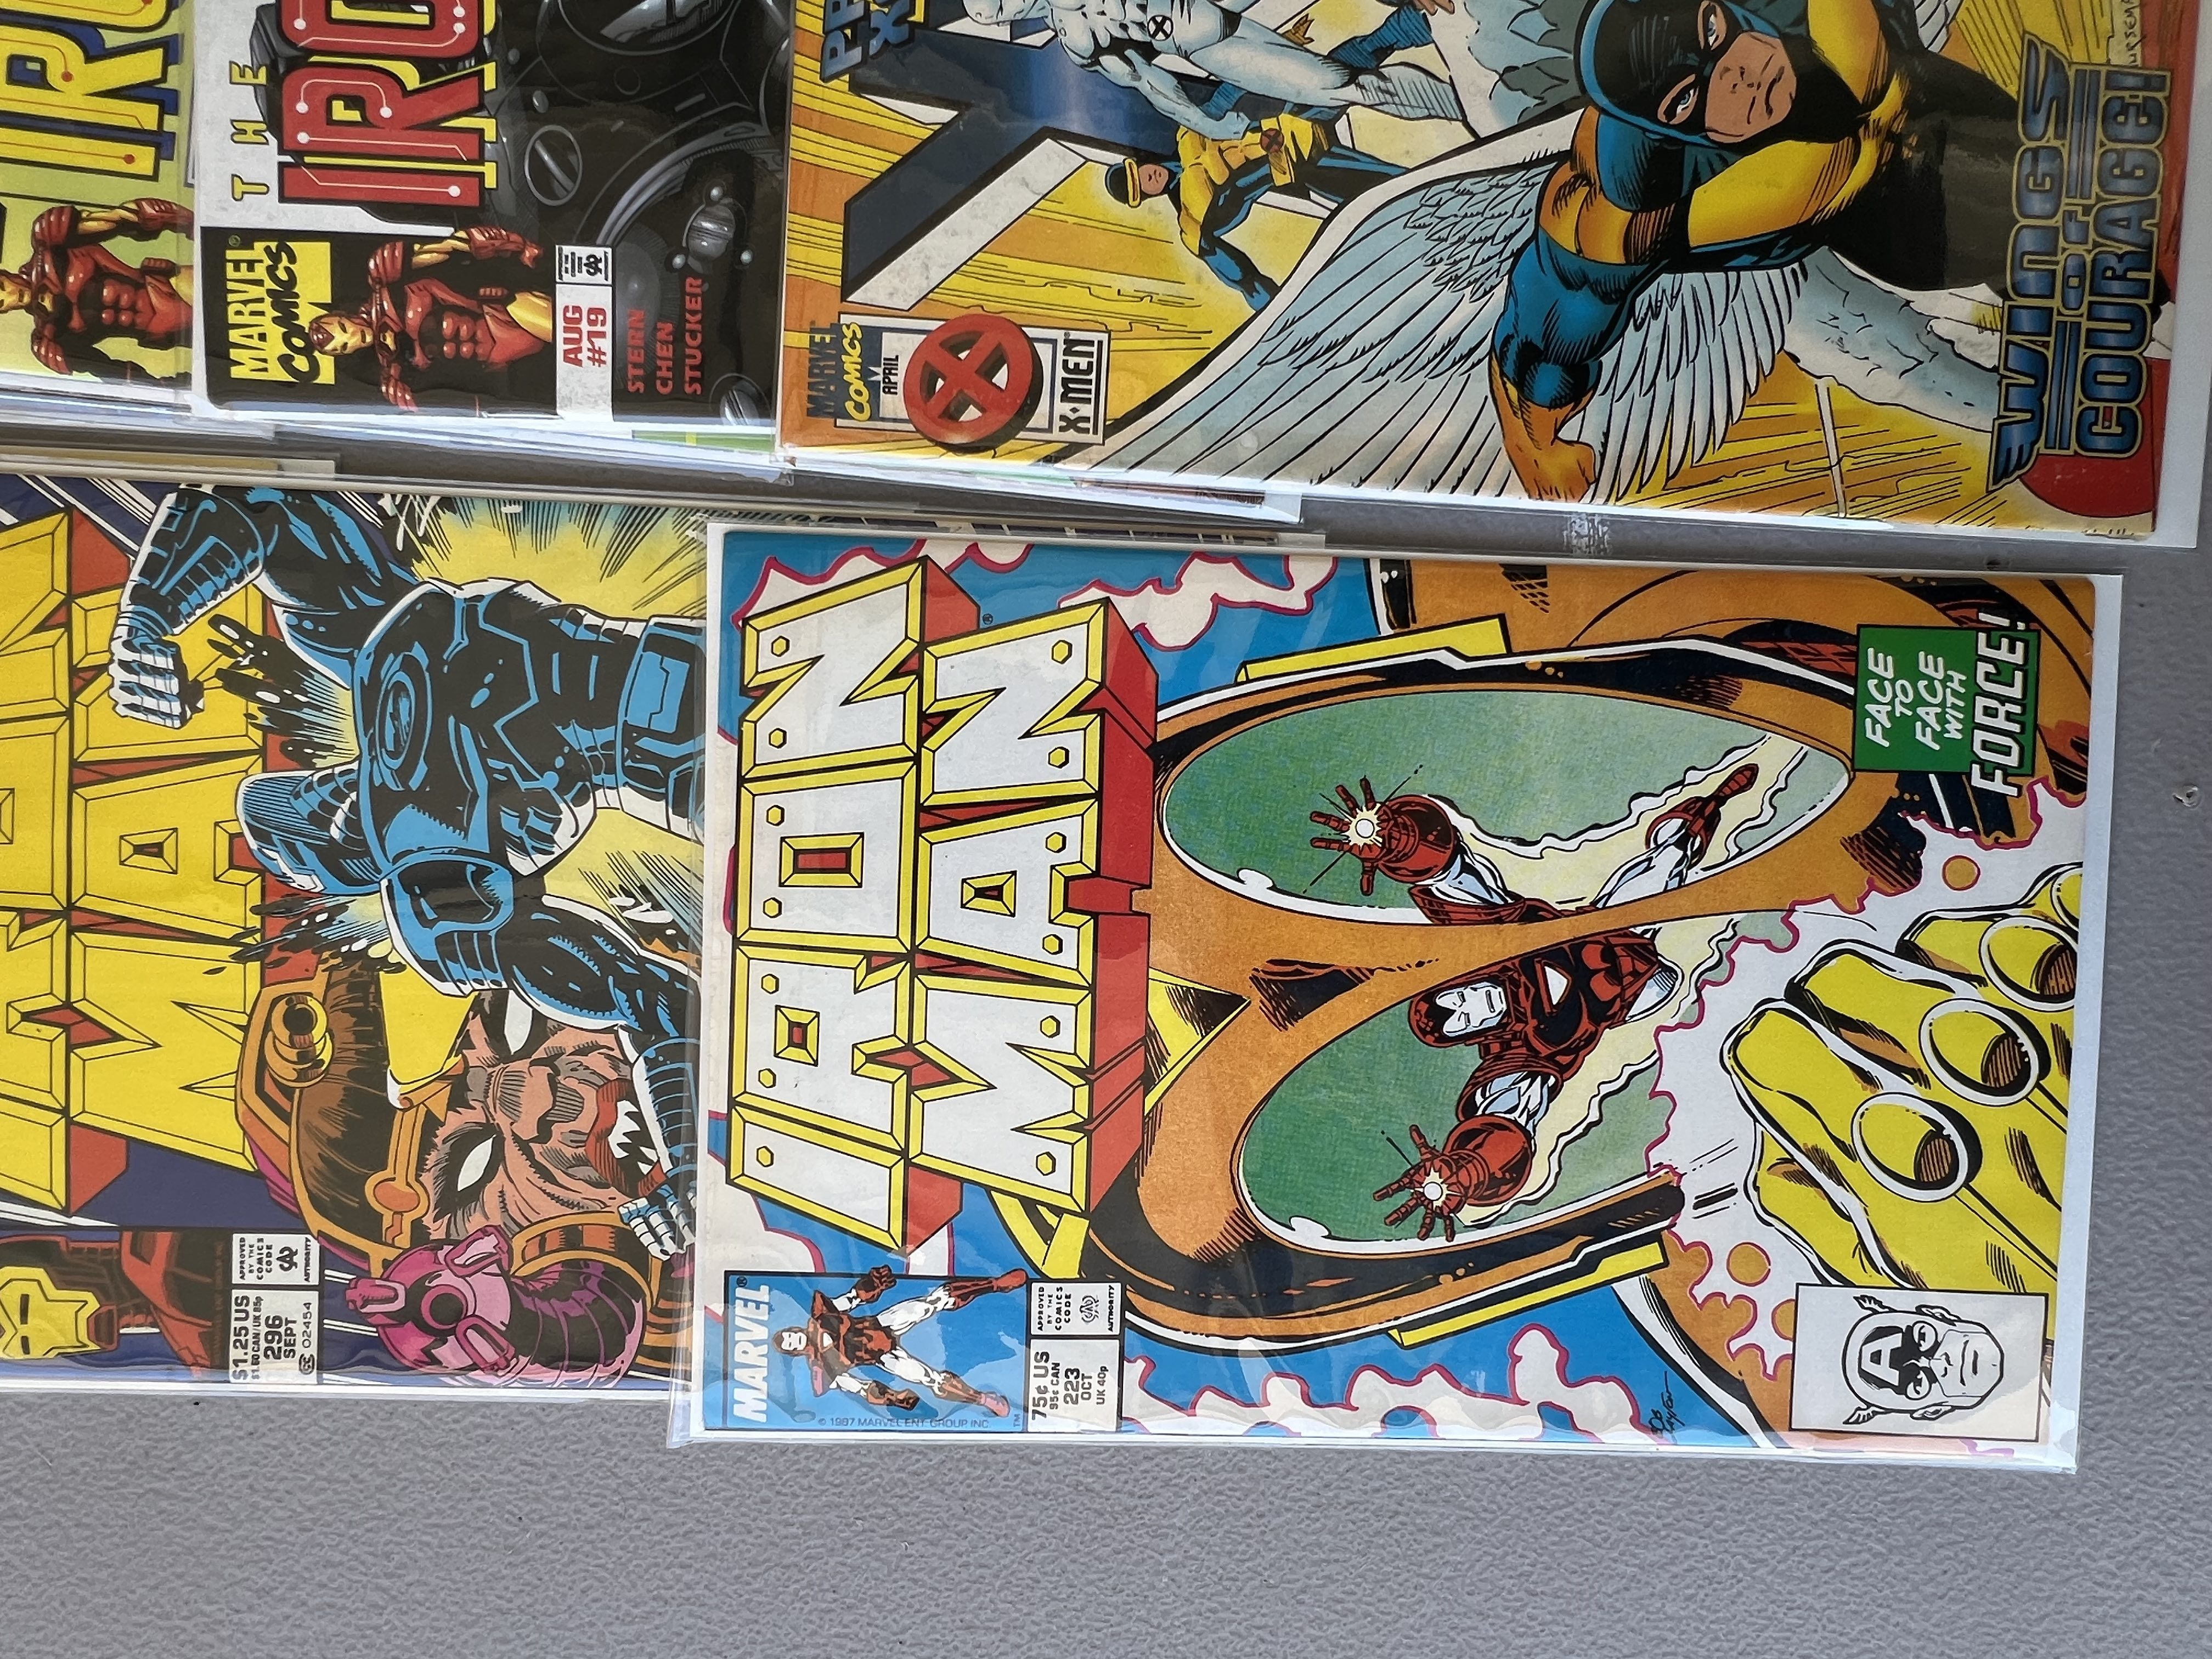 Comic Book Iron X-Men Marvel Comics collection lot 21